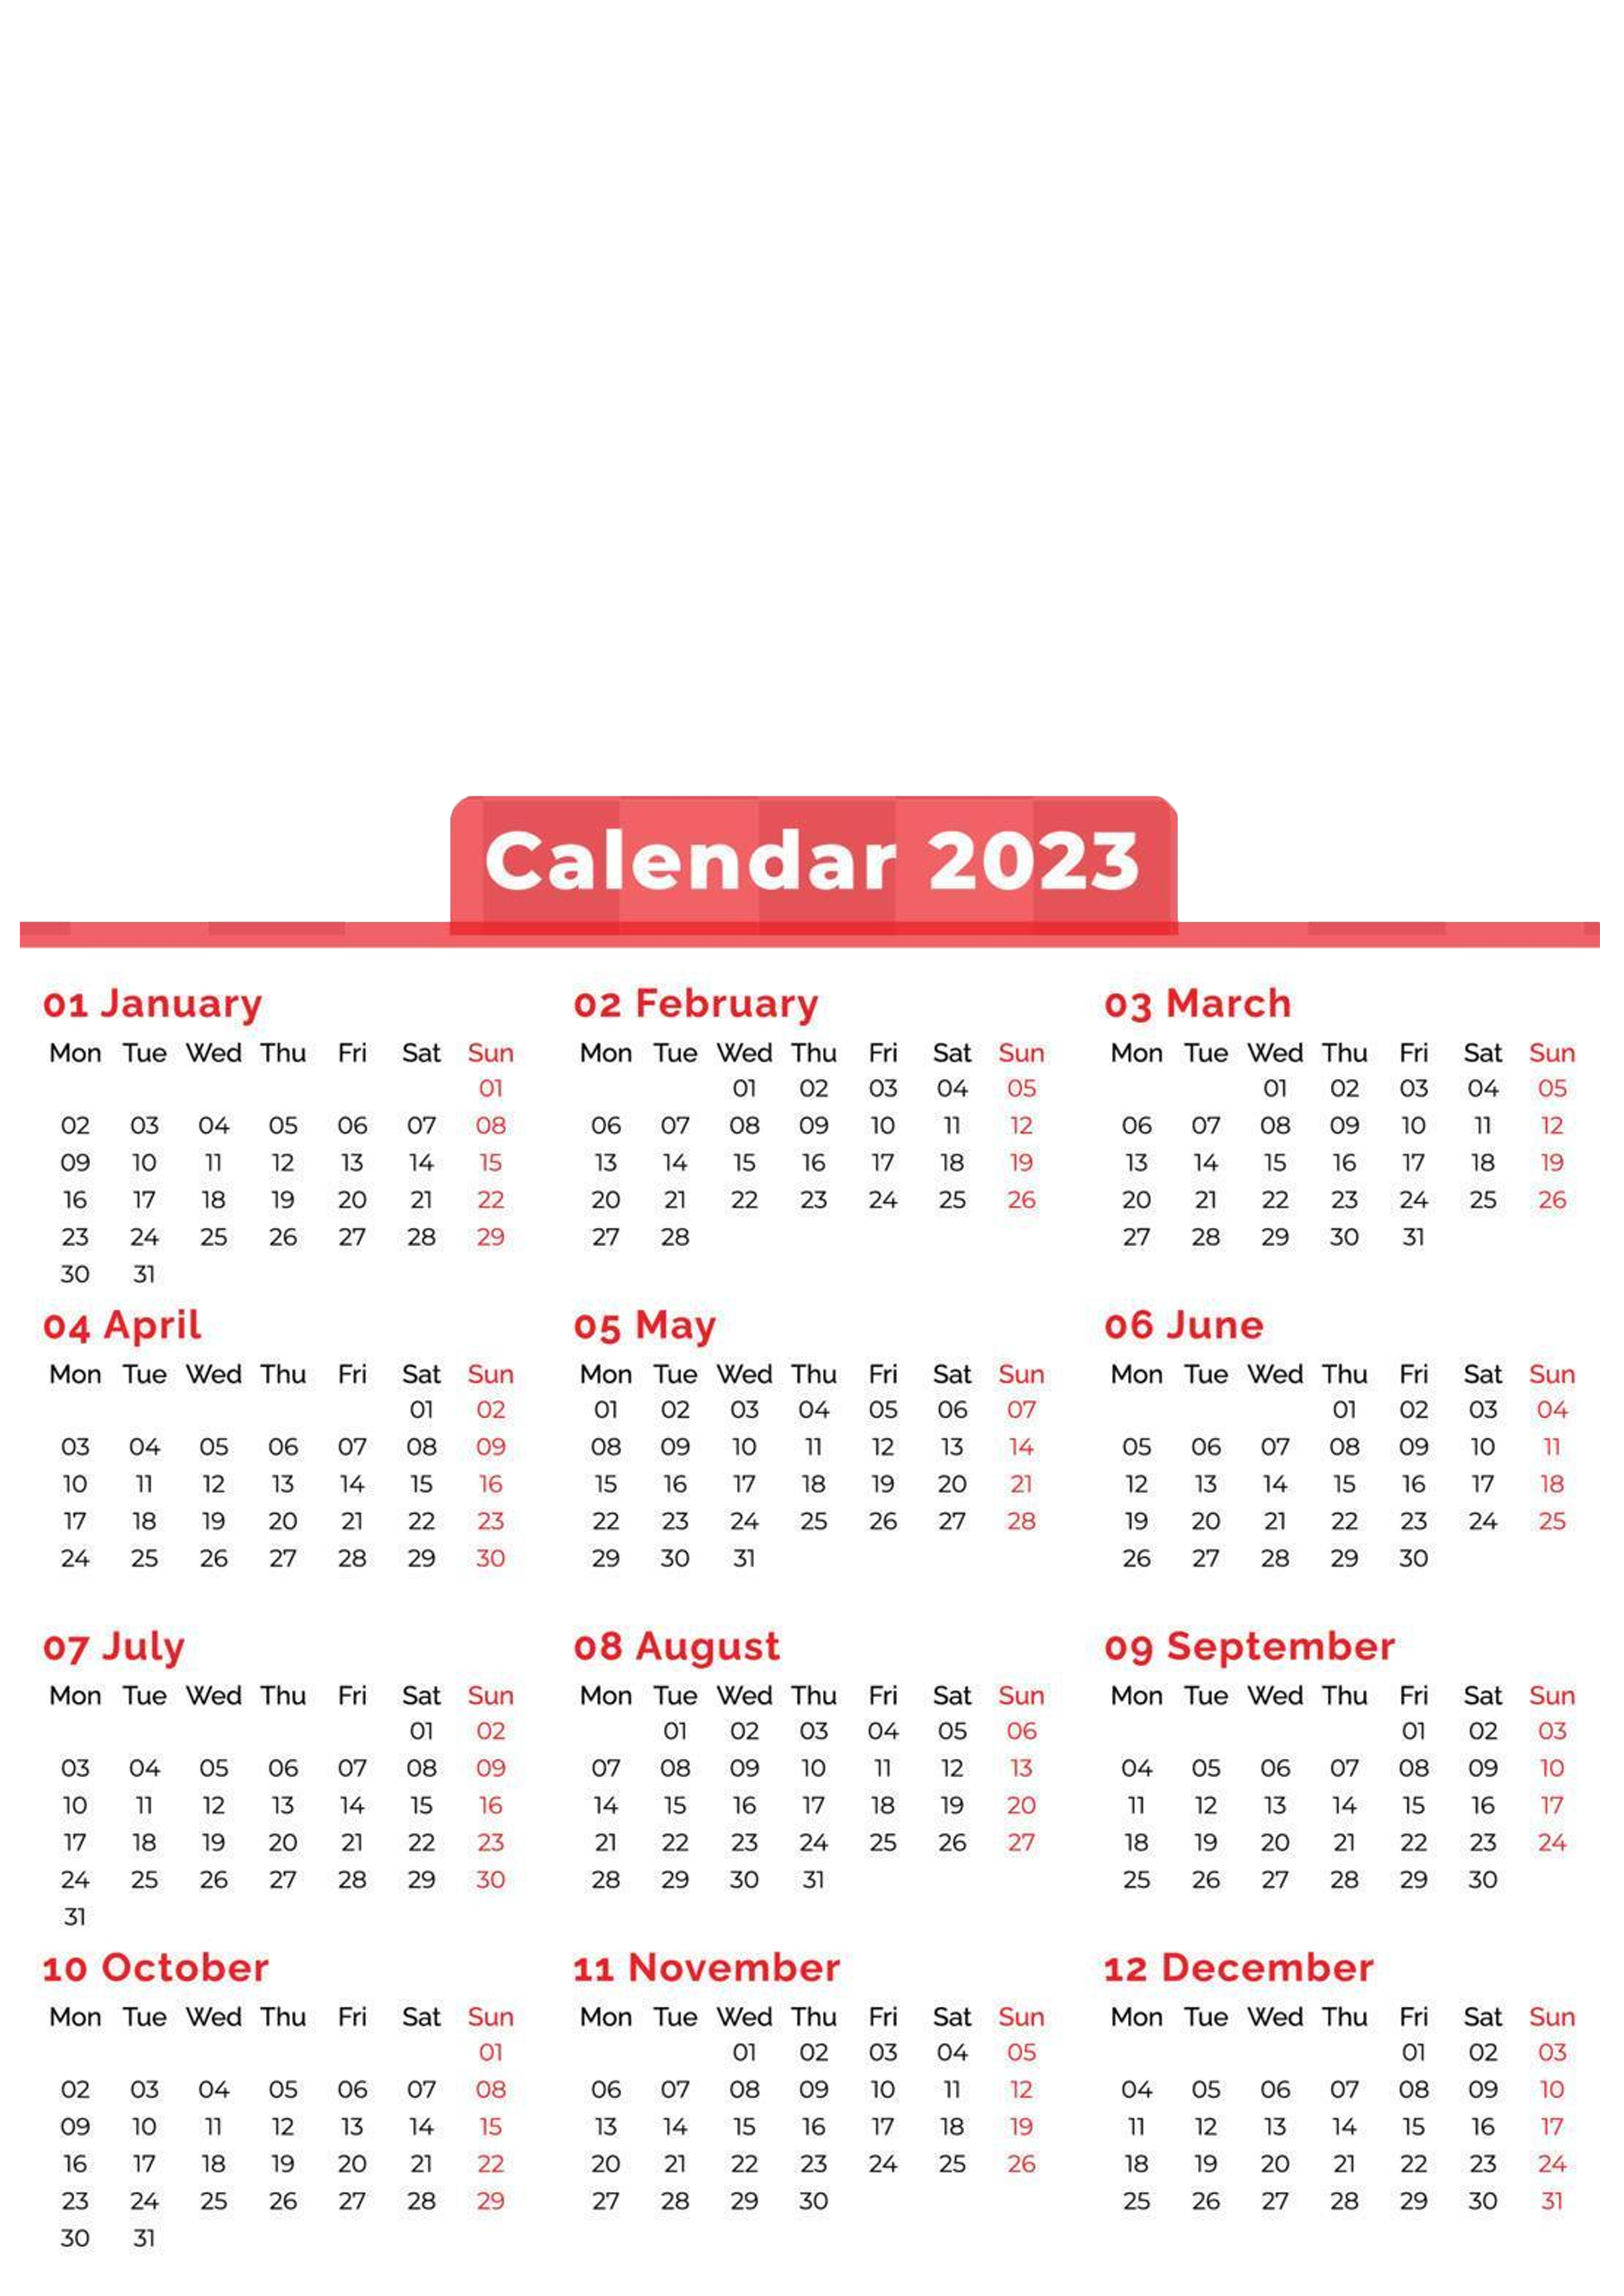 CDAR6 - HAPPY NEW YEAR Calendar 2023 TEMPLATE